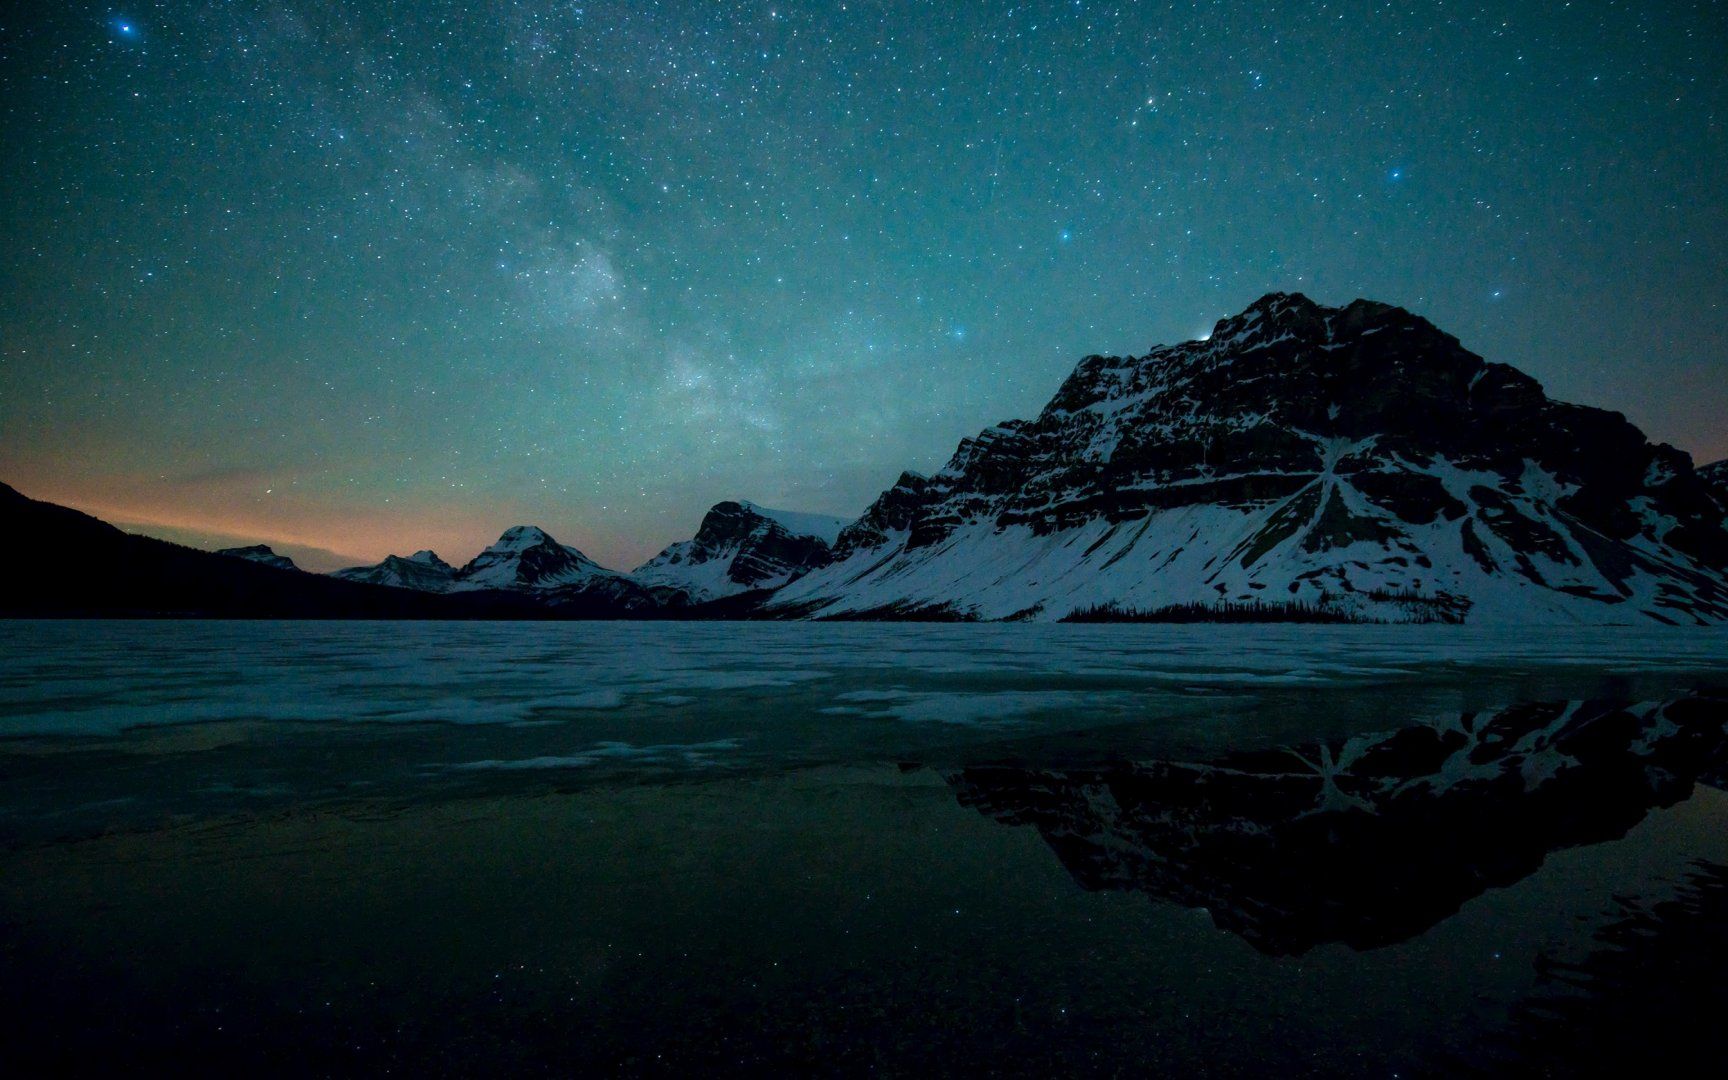 Reflection_Nature_Water_Landscape_Mountain_Winter_Stars_Sky_Night_3840x2400.jpg